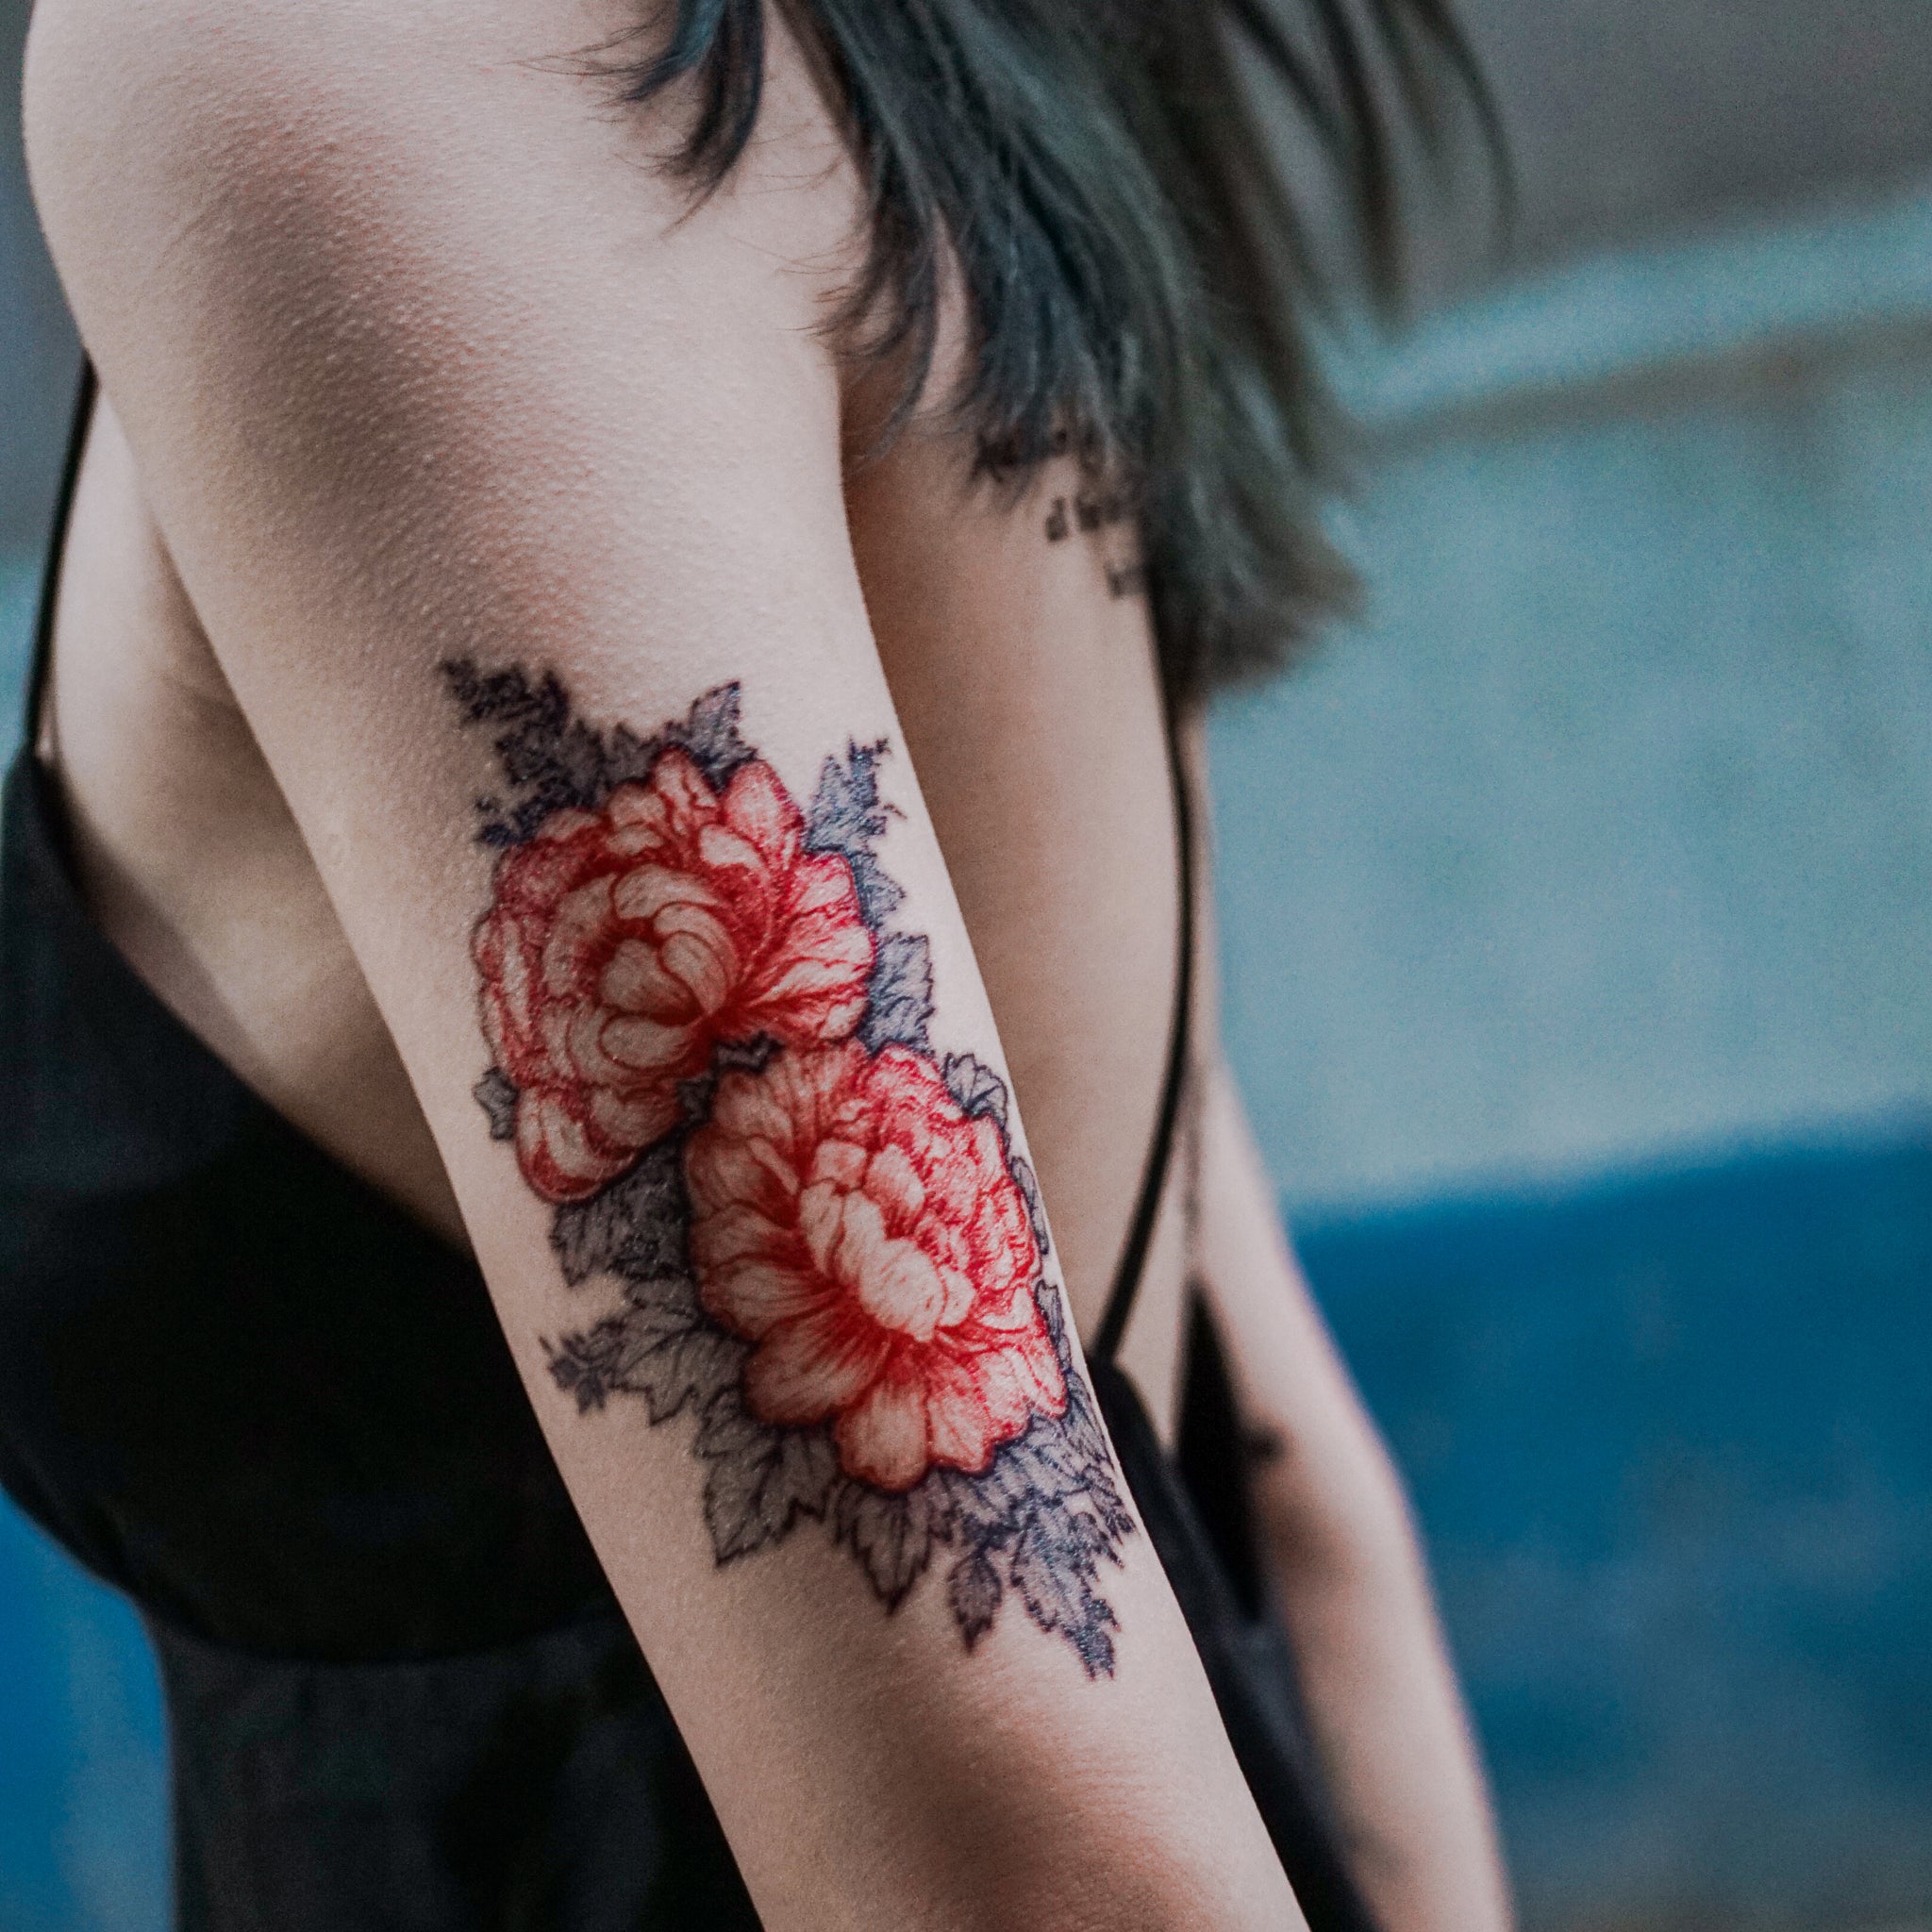 Fancy floral tattoo